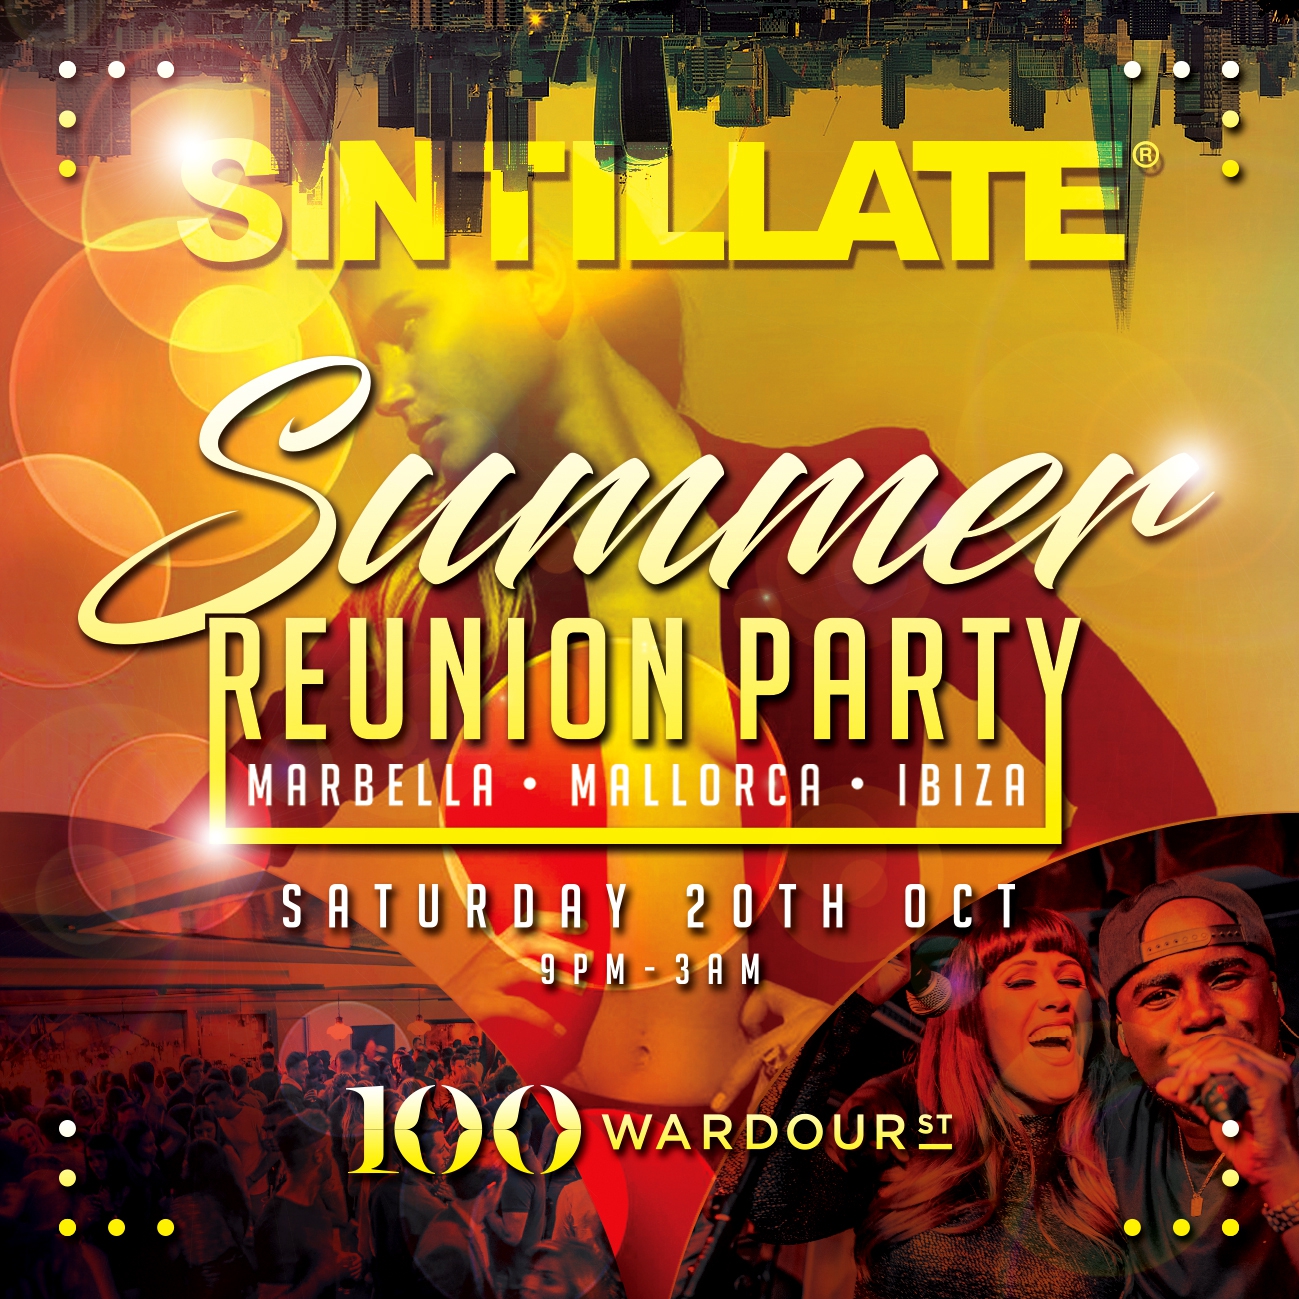 SINTILLATE Presents Summer Reunion Party at 100 Wardour St